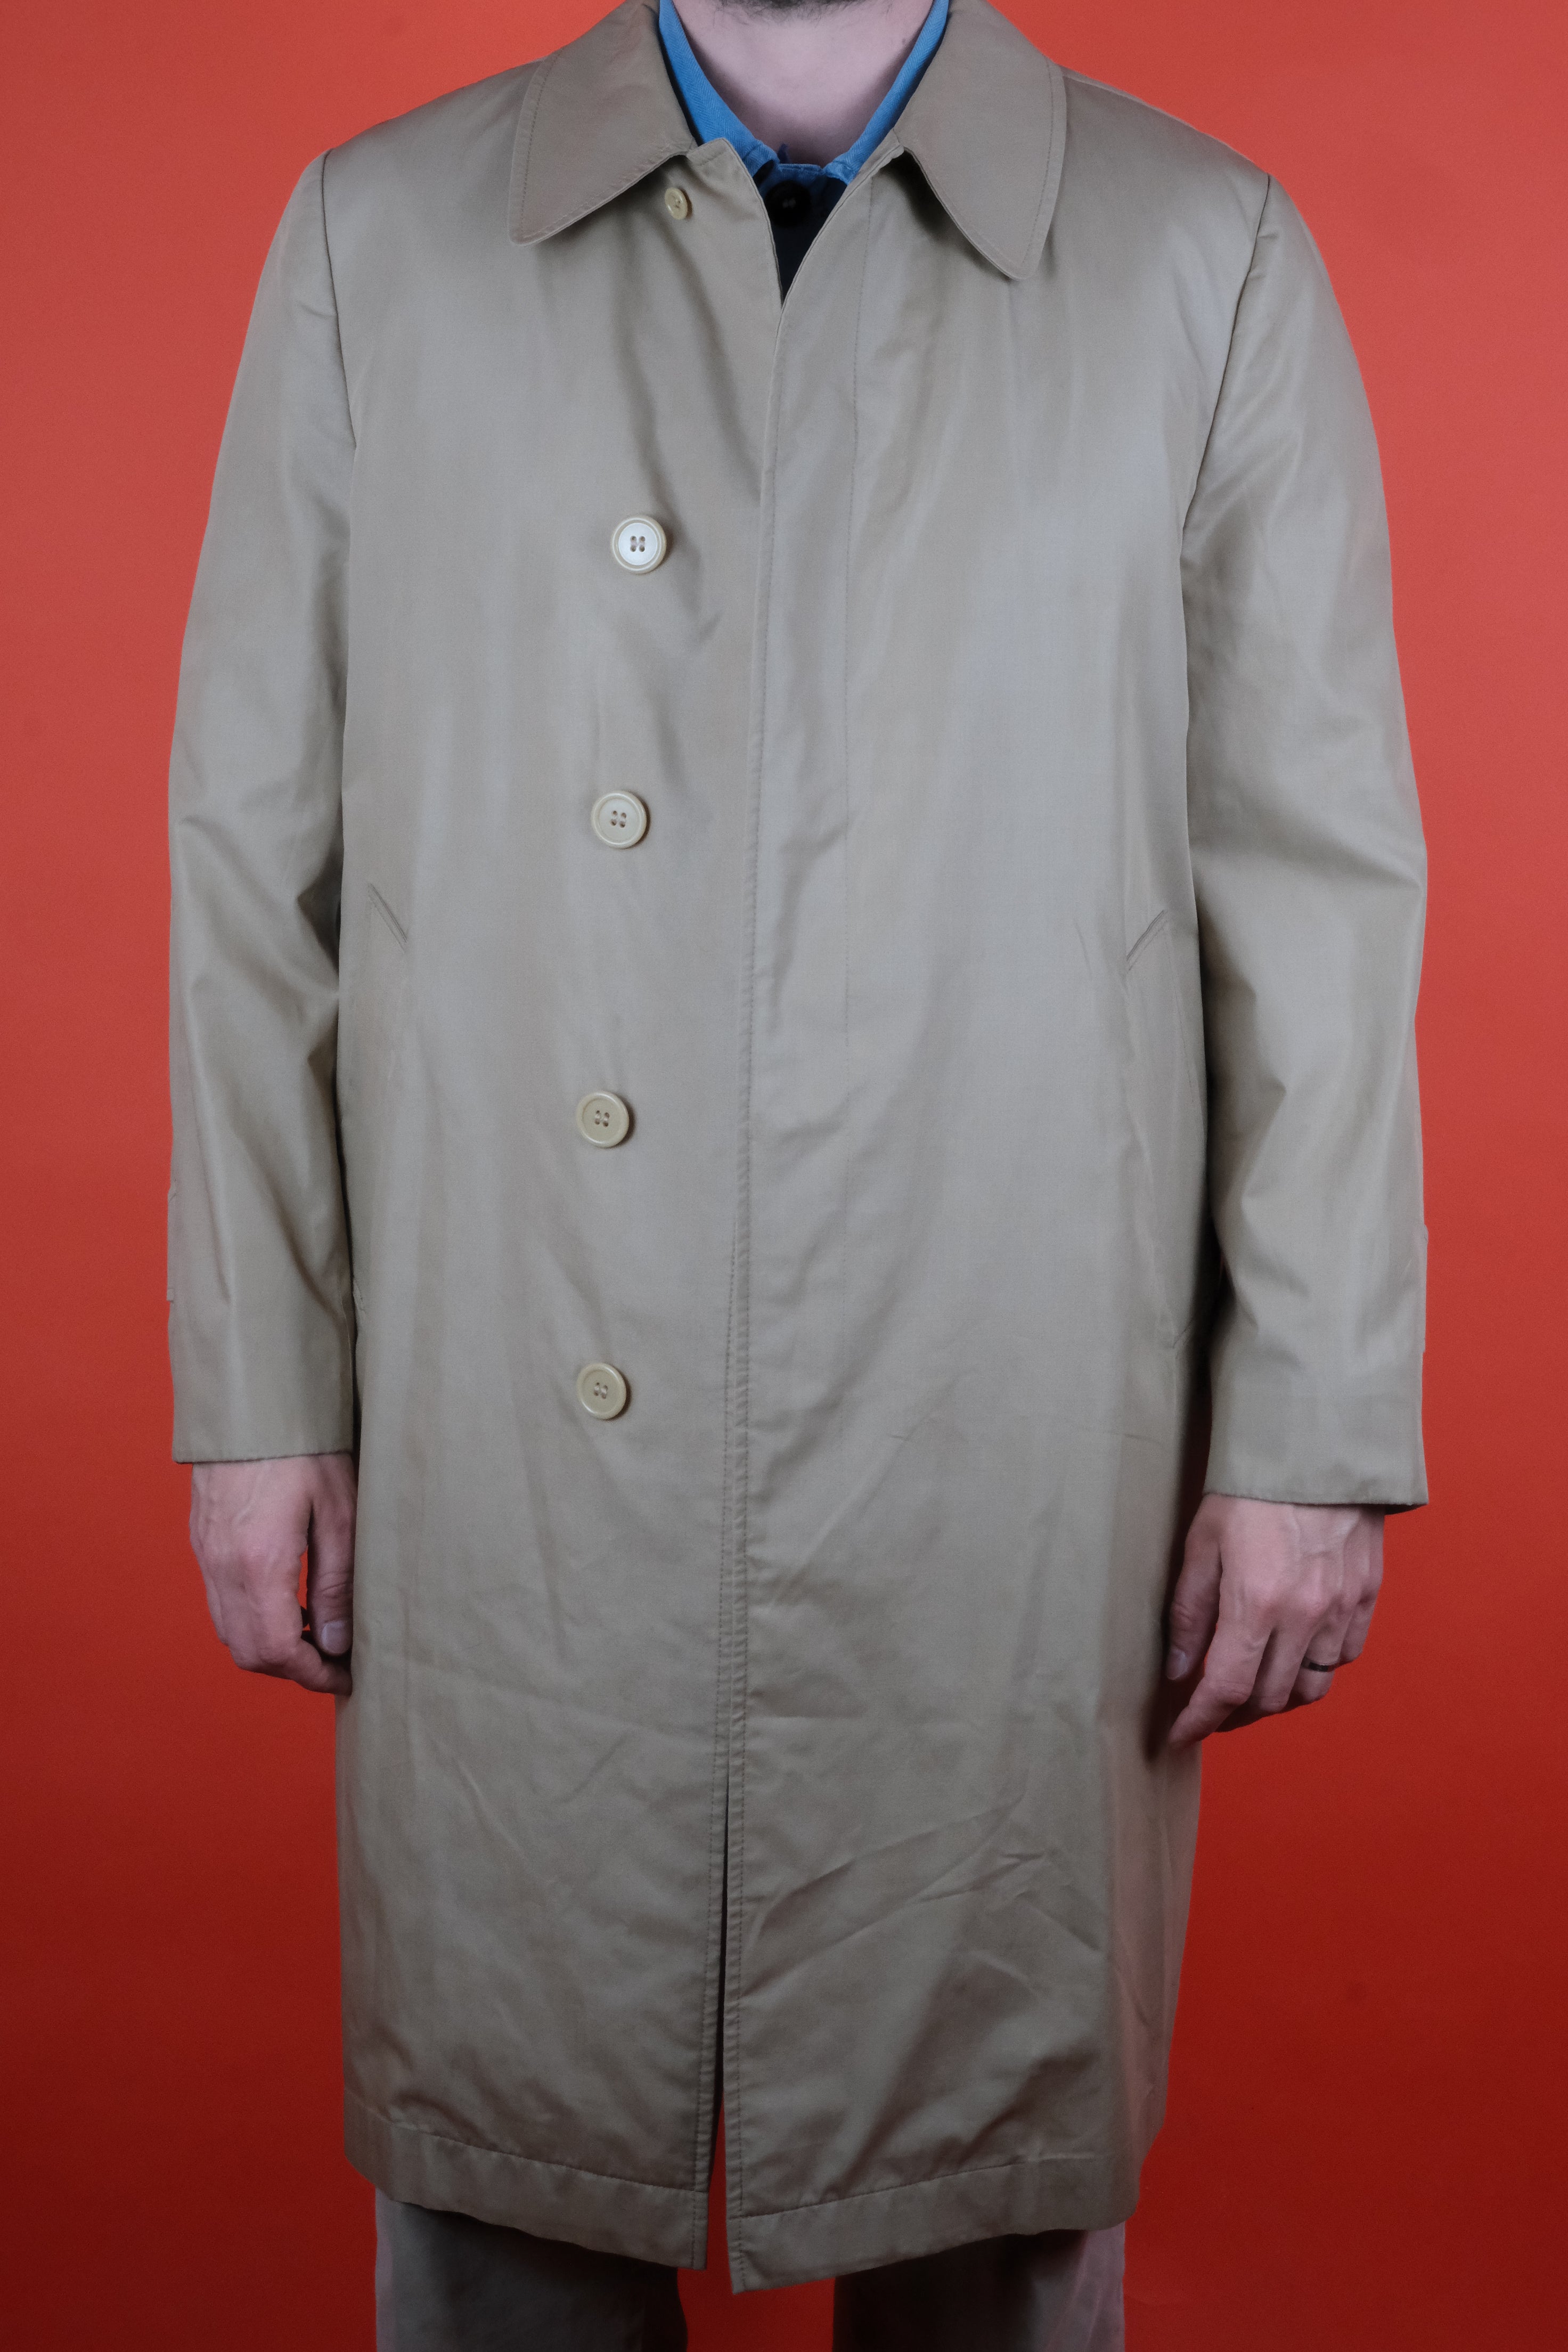 Vintage Coats for Men ~ Clochard92.com